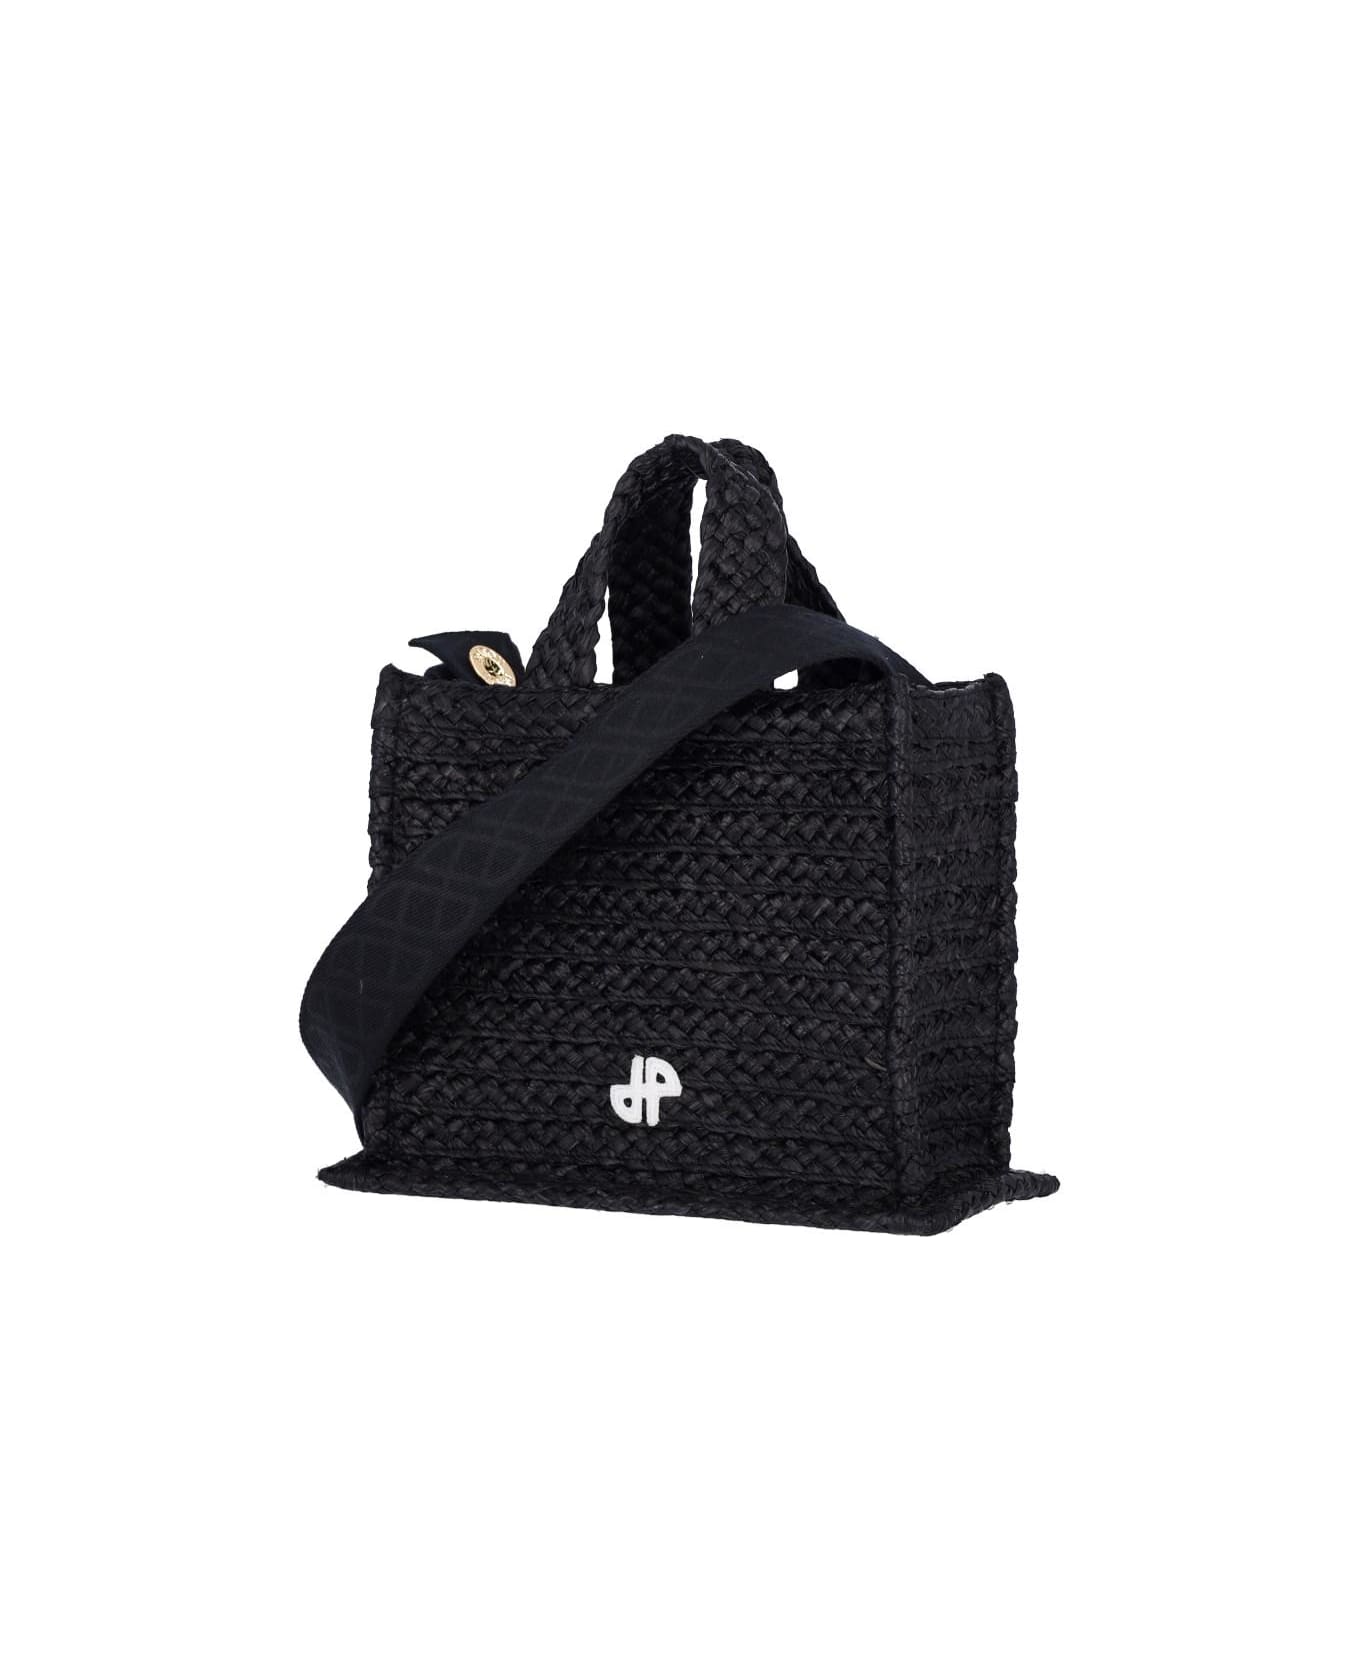 Patou Small Handbag 'jp' - Black